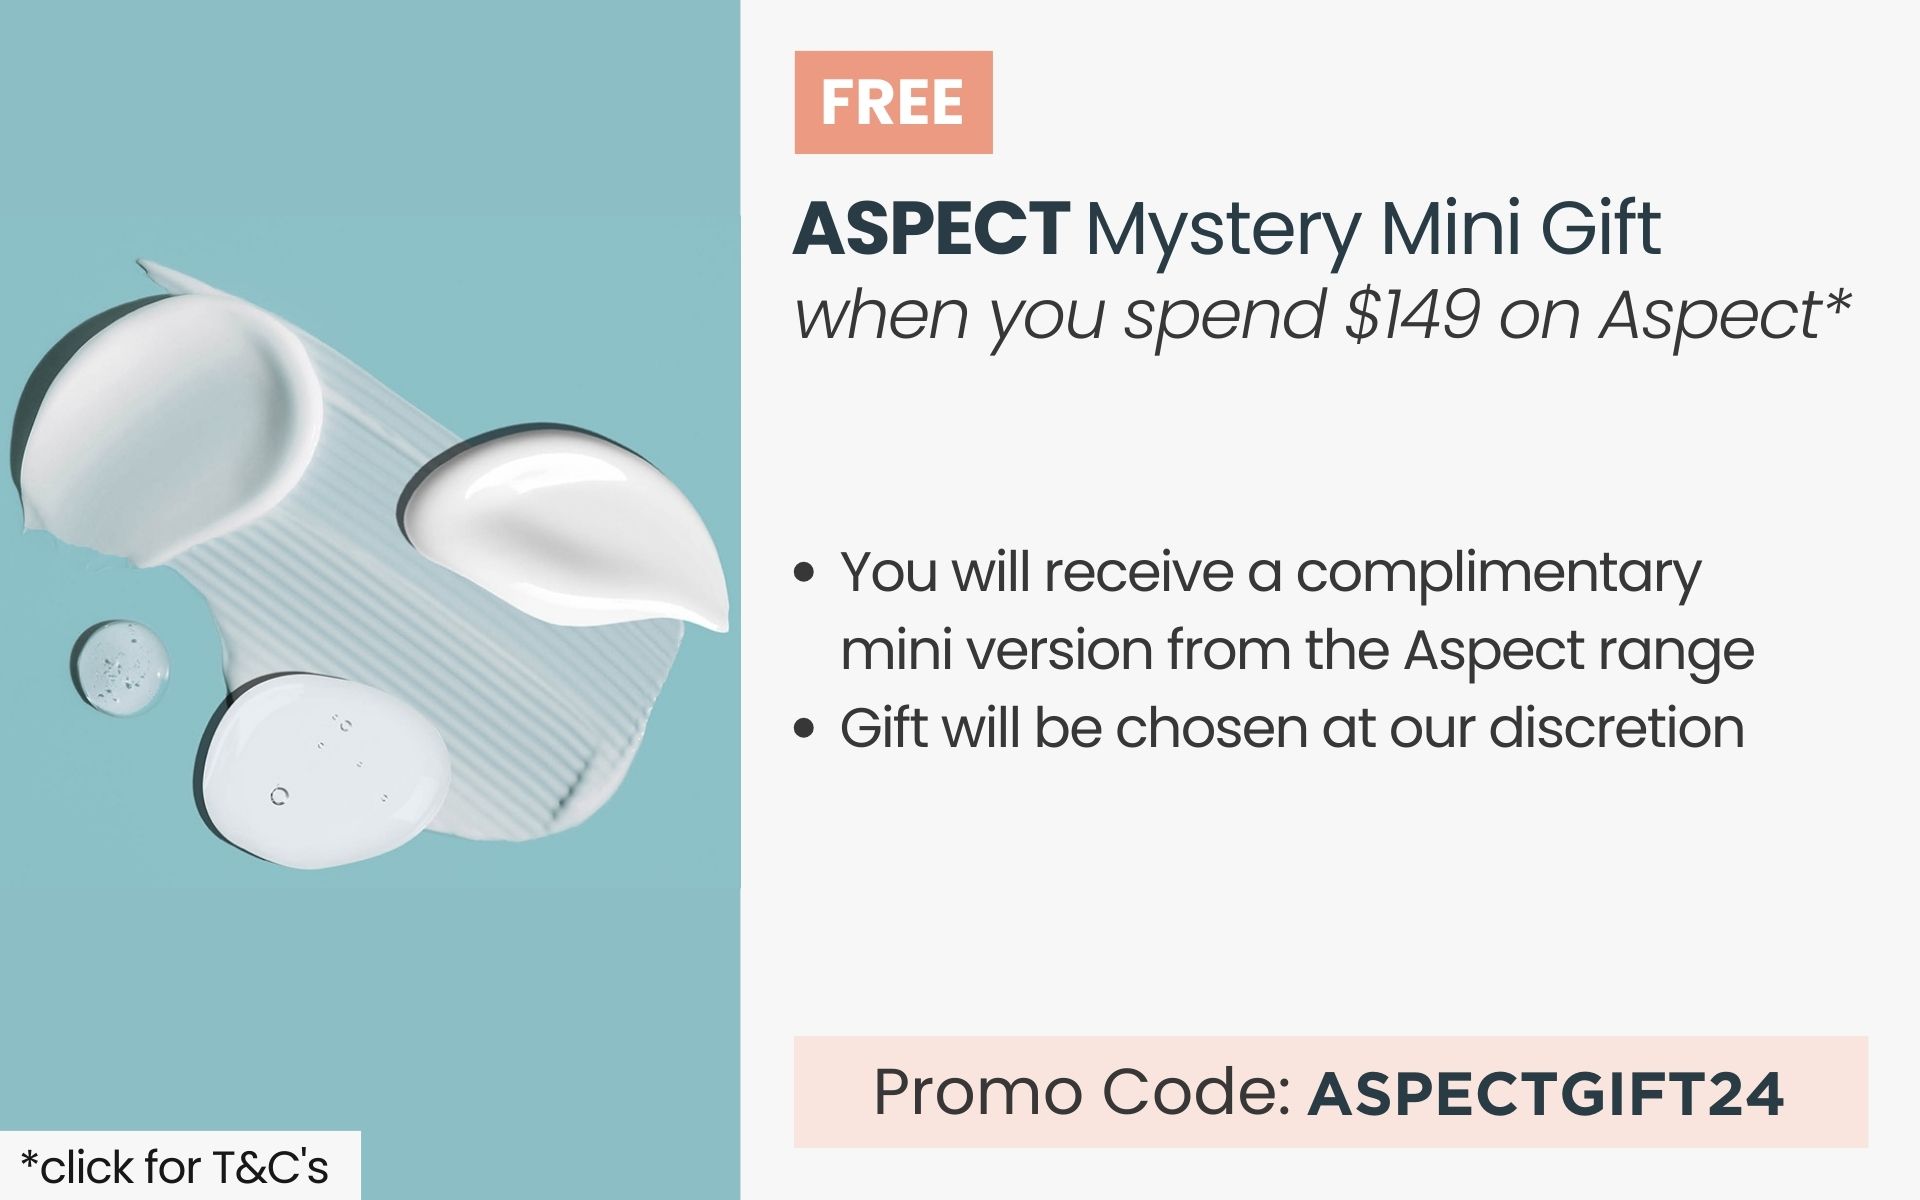 FREE Aspect Mystery Mini Gift. Min spend $149 on Aspect. Promo Code ASPECTGIFT24